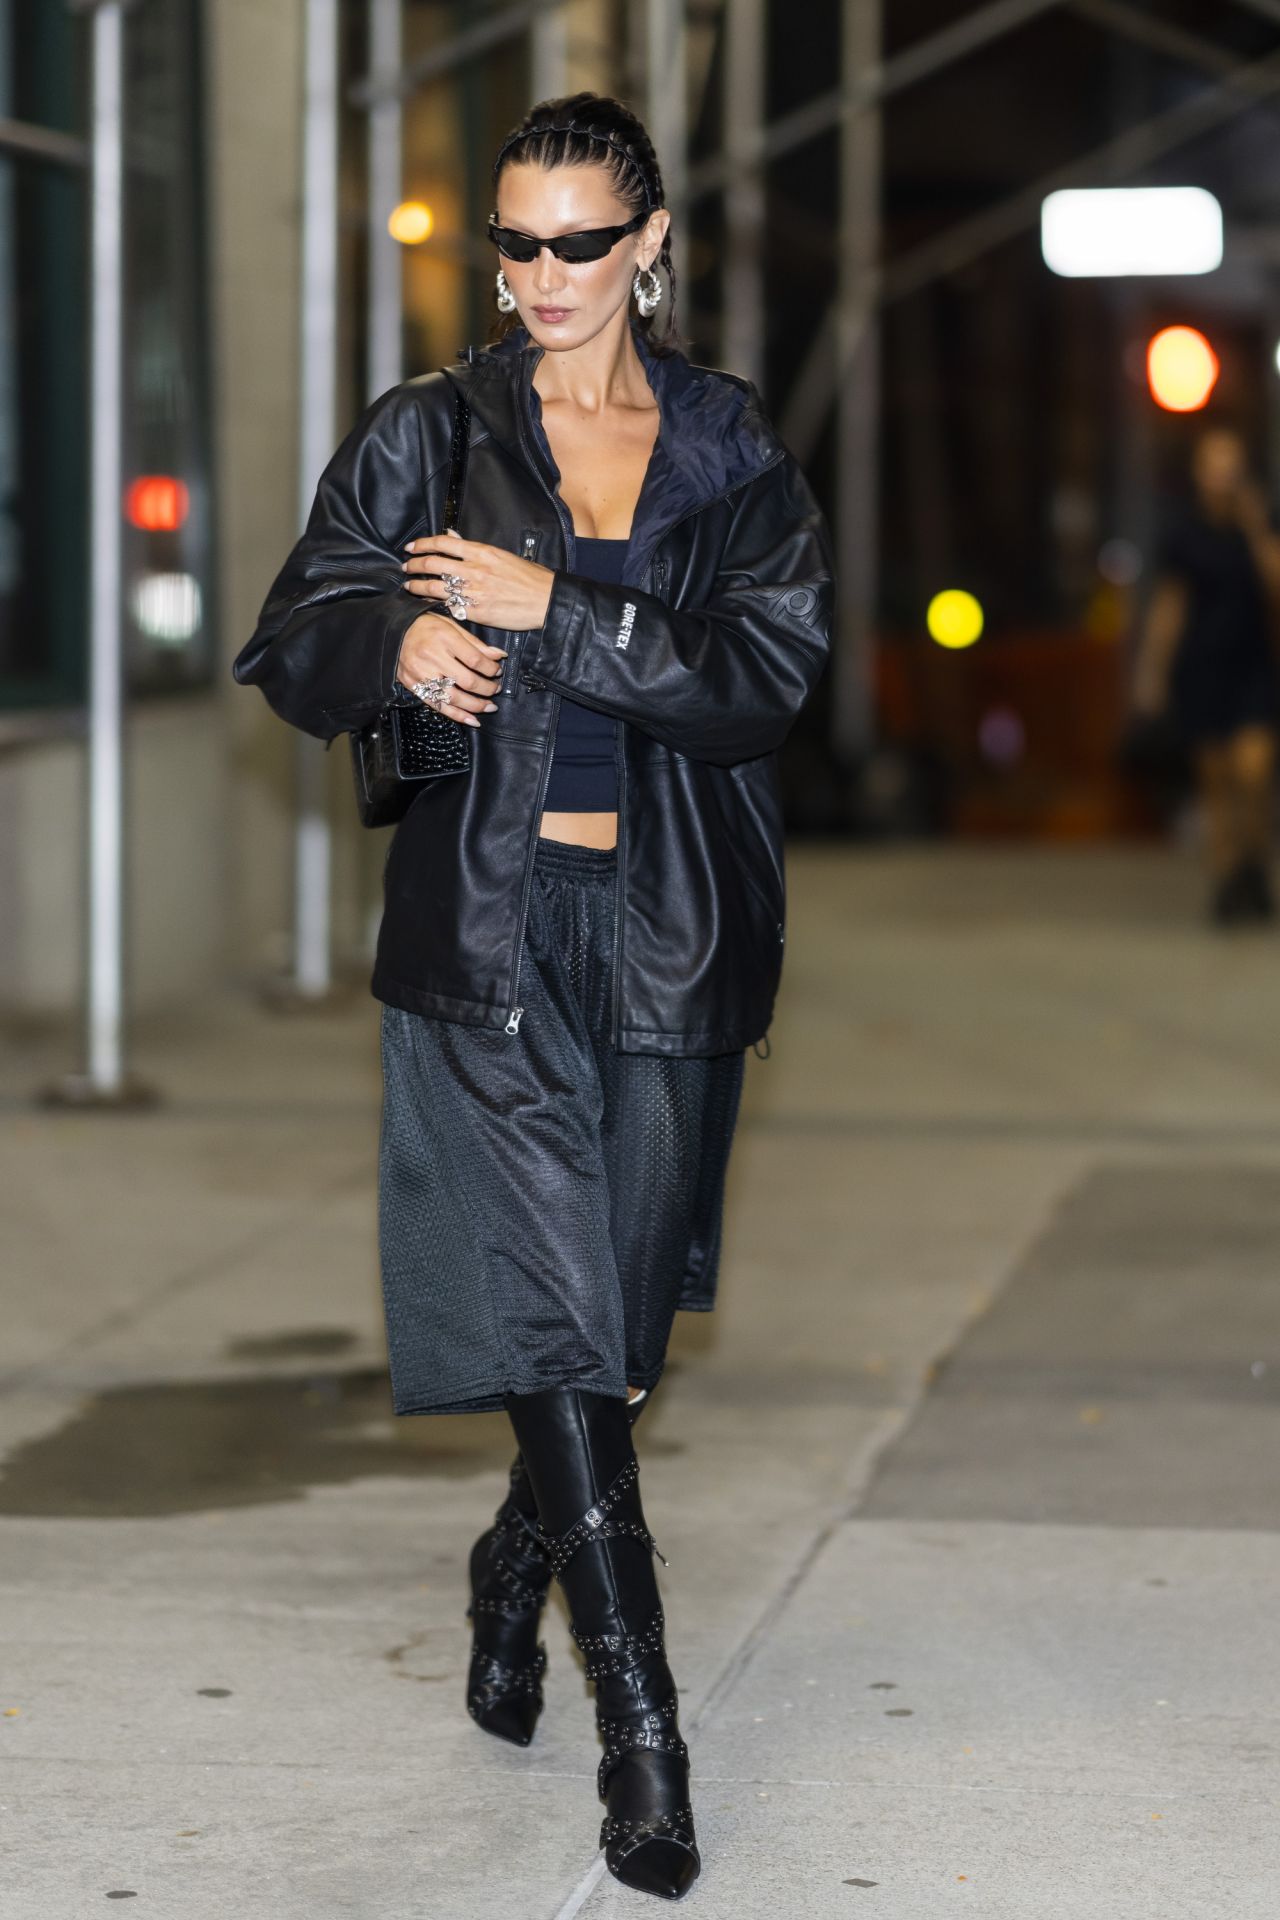 Bella Hadid New York City November 2, 2020 – Star Style